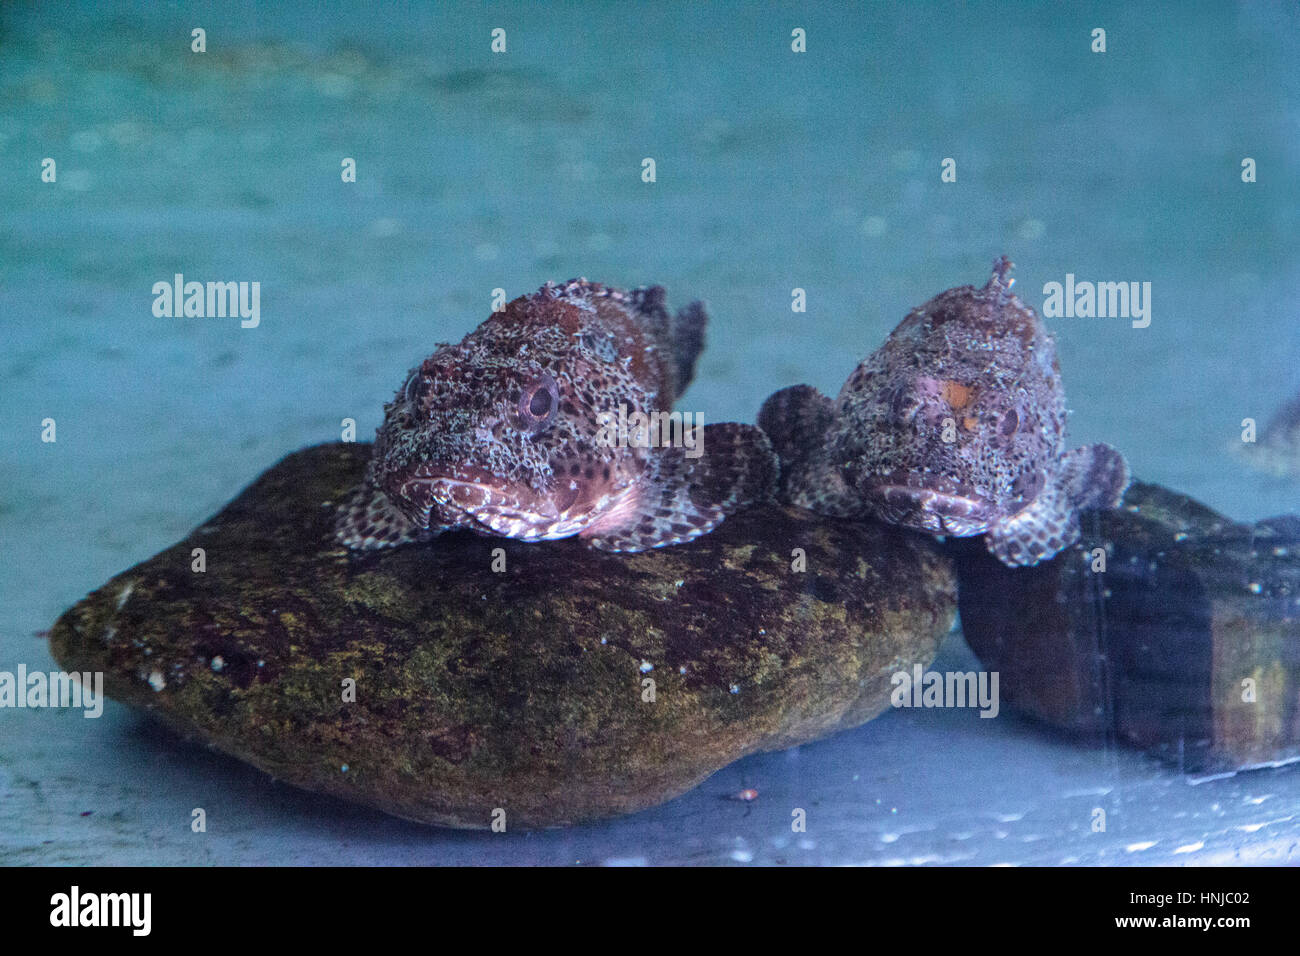 California scorpion rockfish called Scorpaena guttata is found along the ocean floor among rocks, waiting to ambush its prey Stock Photo